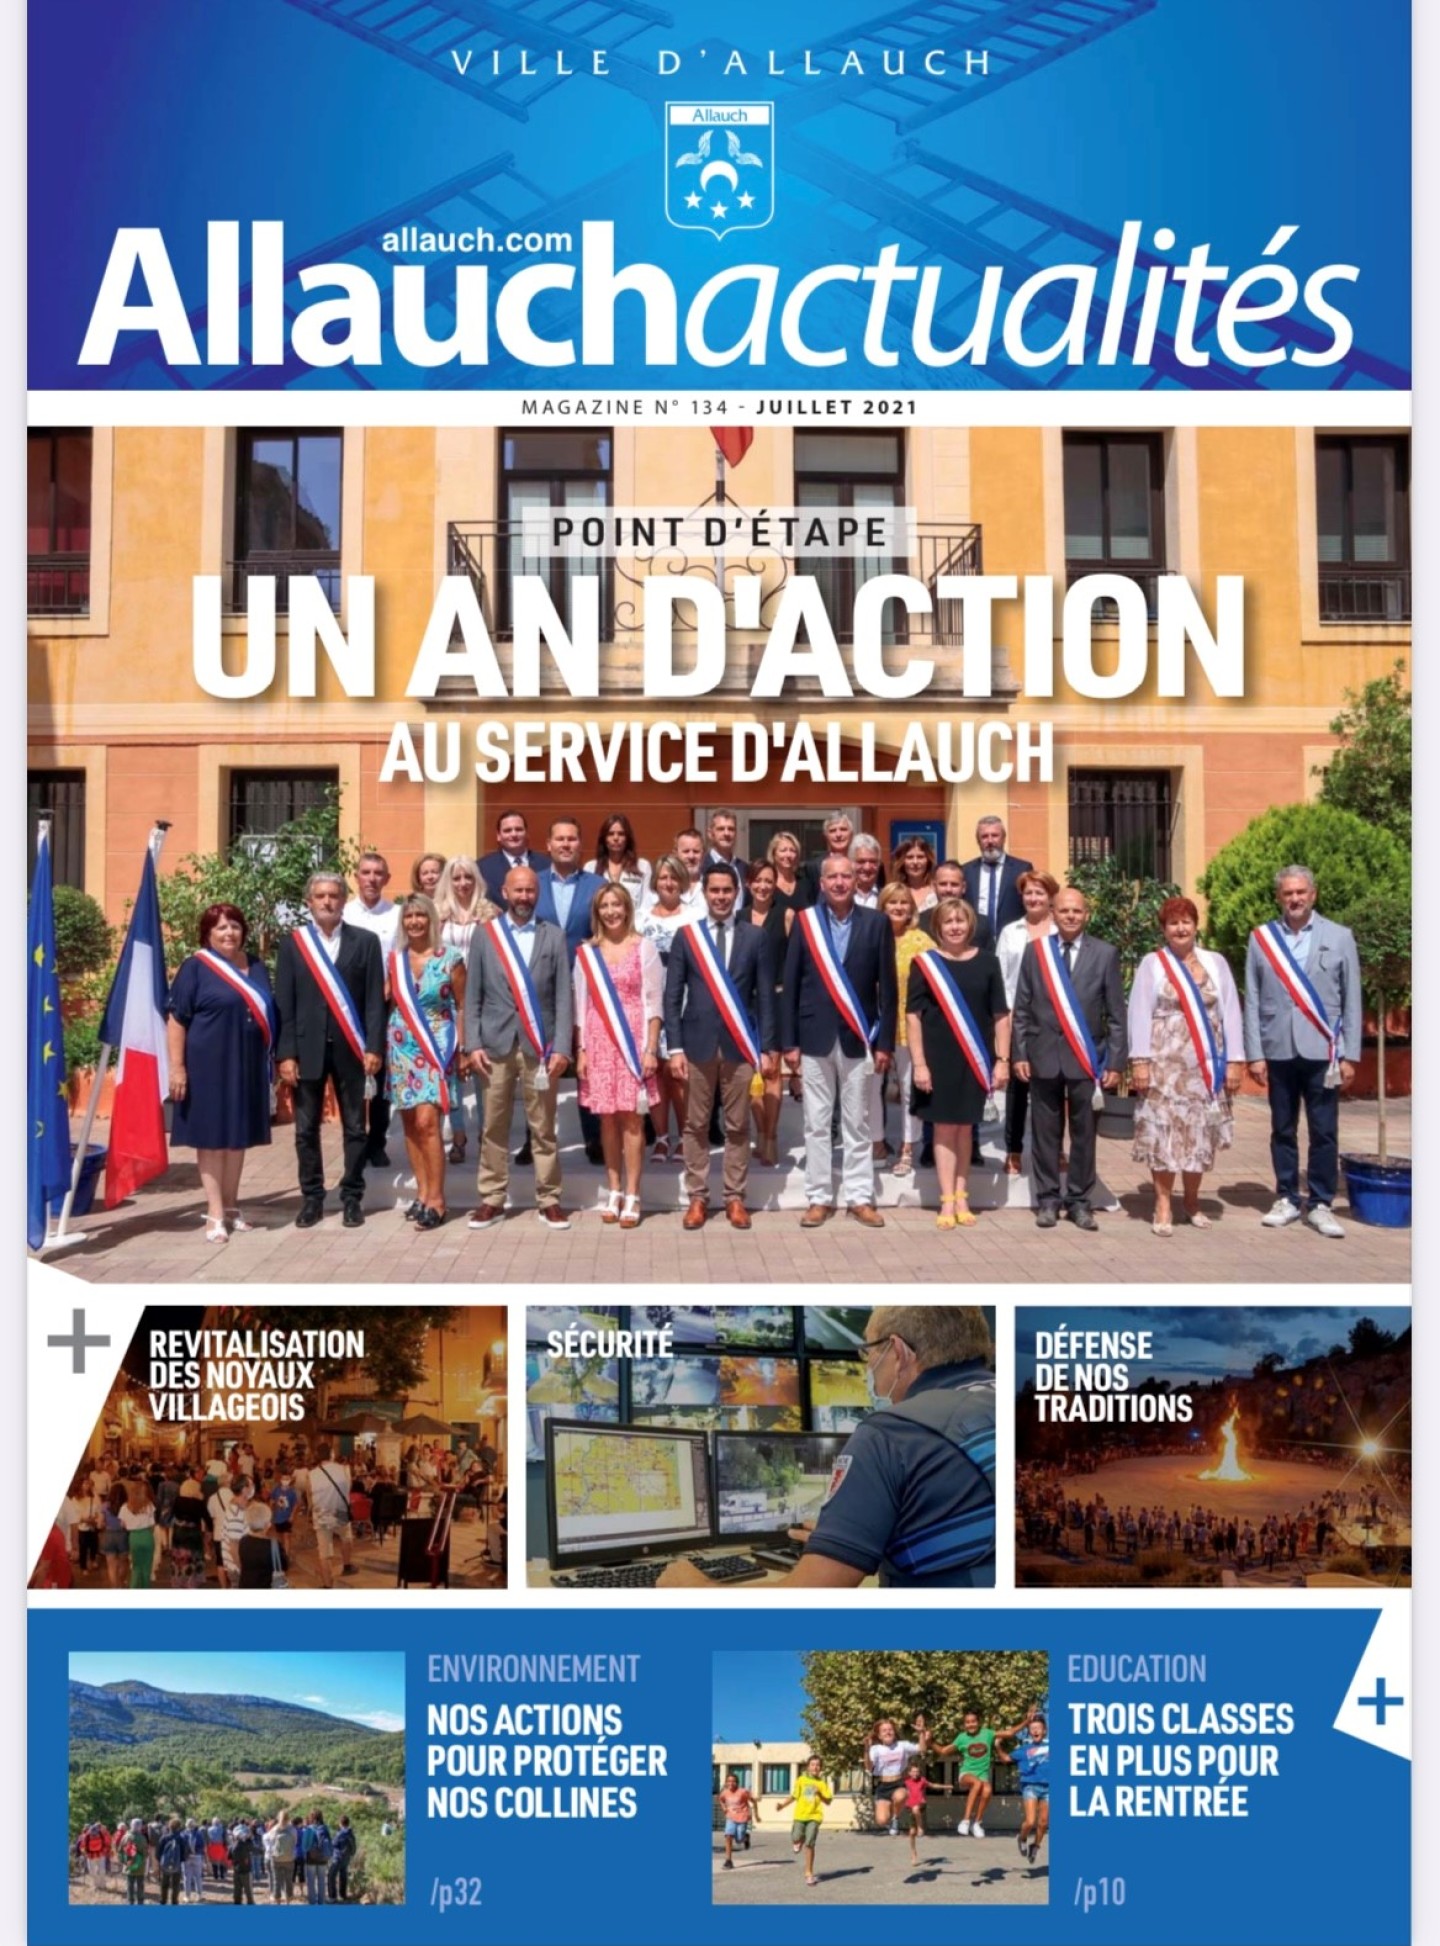 Allauch - Un an d'action au service d'Alllauch